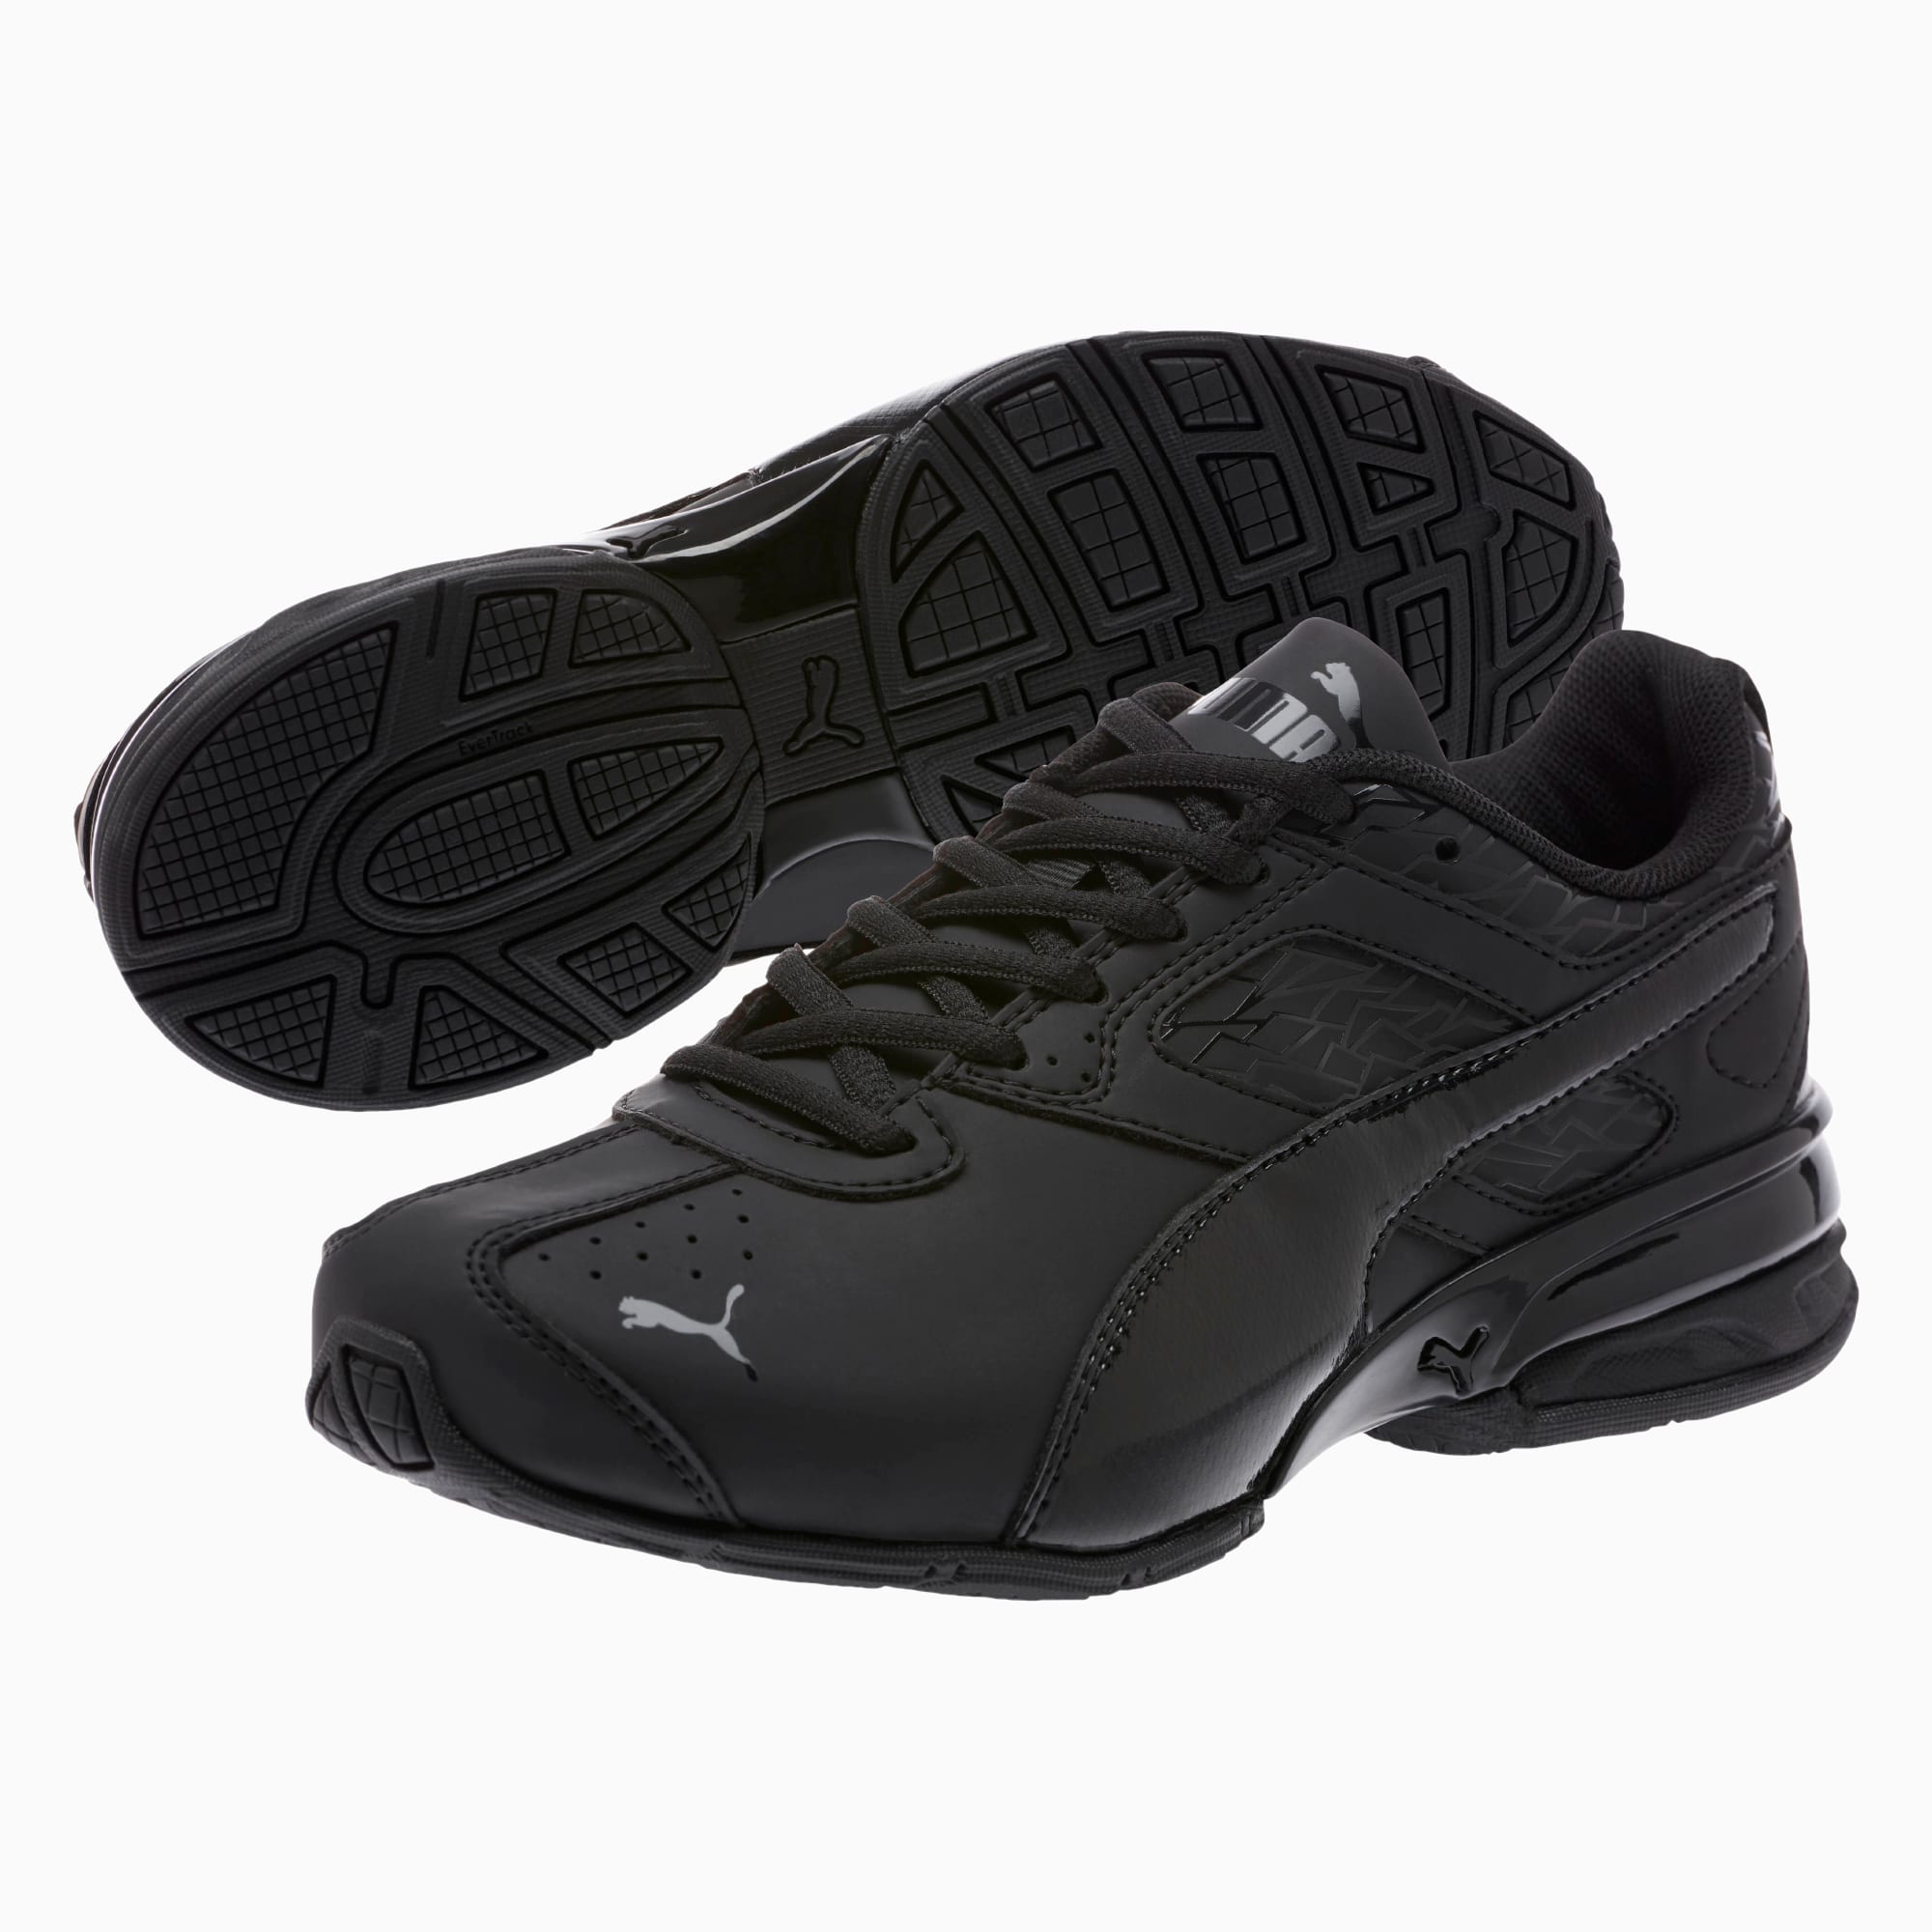 Tazon 6 Fracture FM Sneakers JR | PUMA US